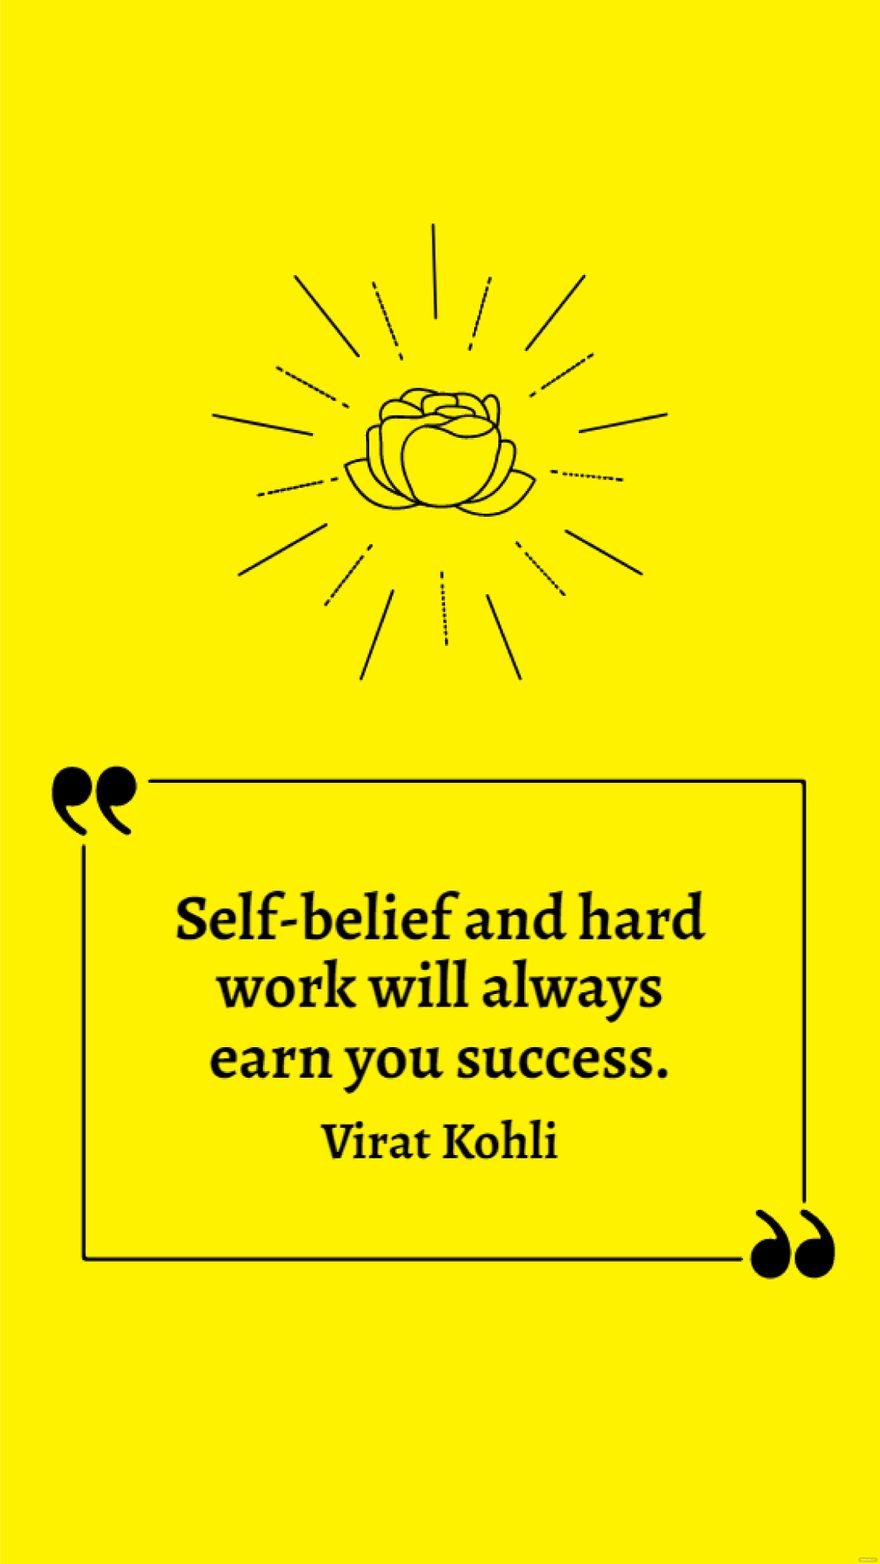 Free Virat Kohli - Self-belief and hard work will always earn you success. in JPG